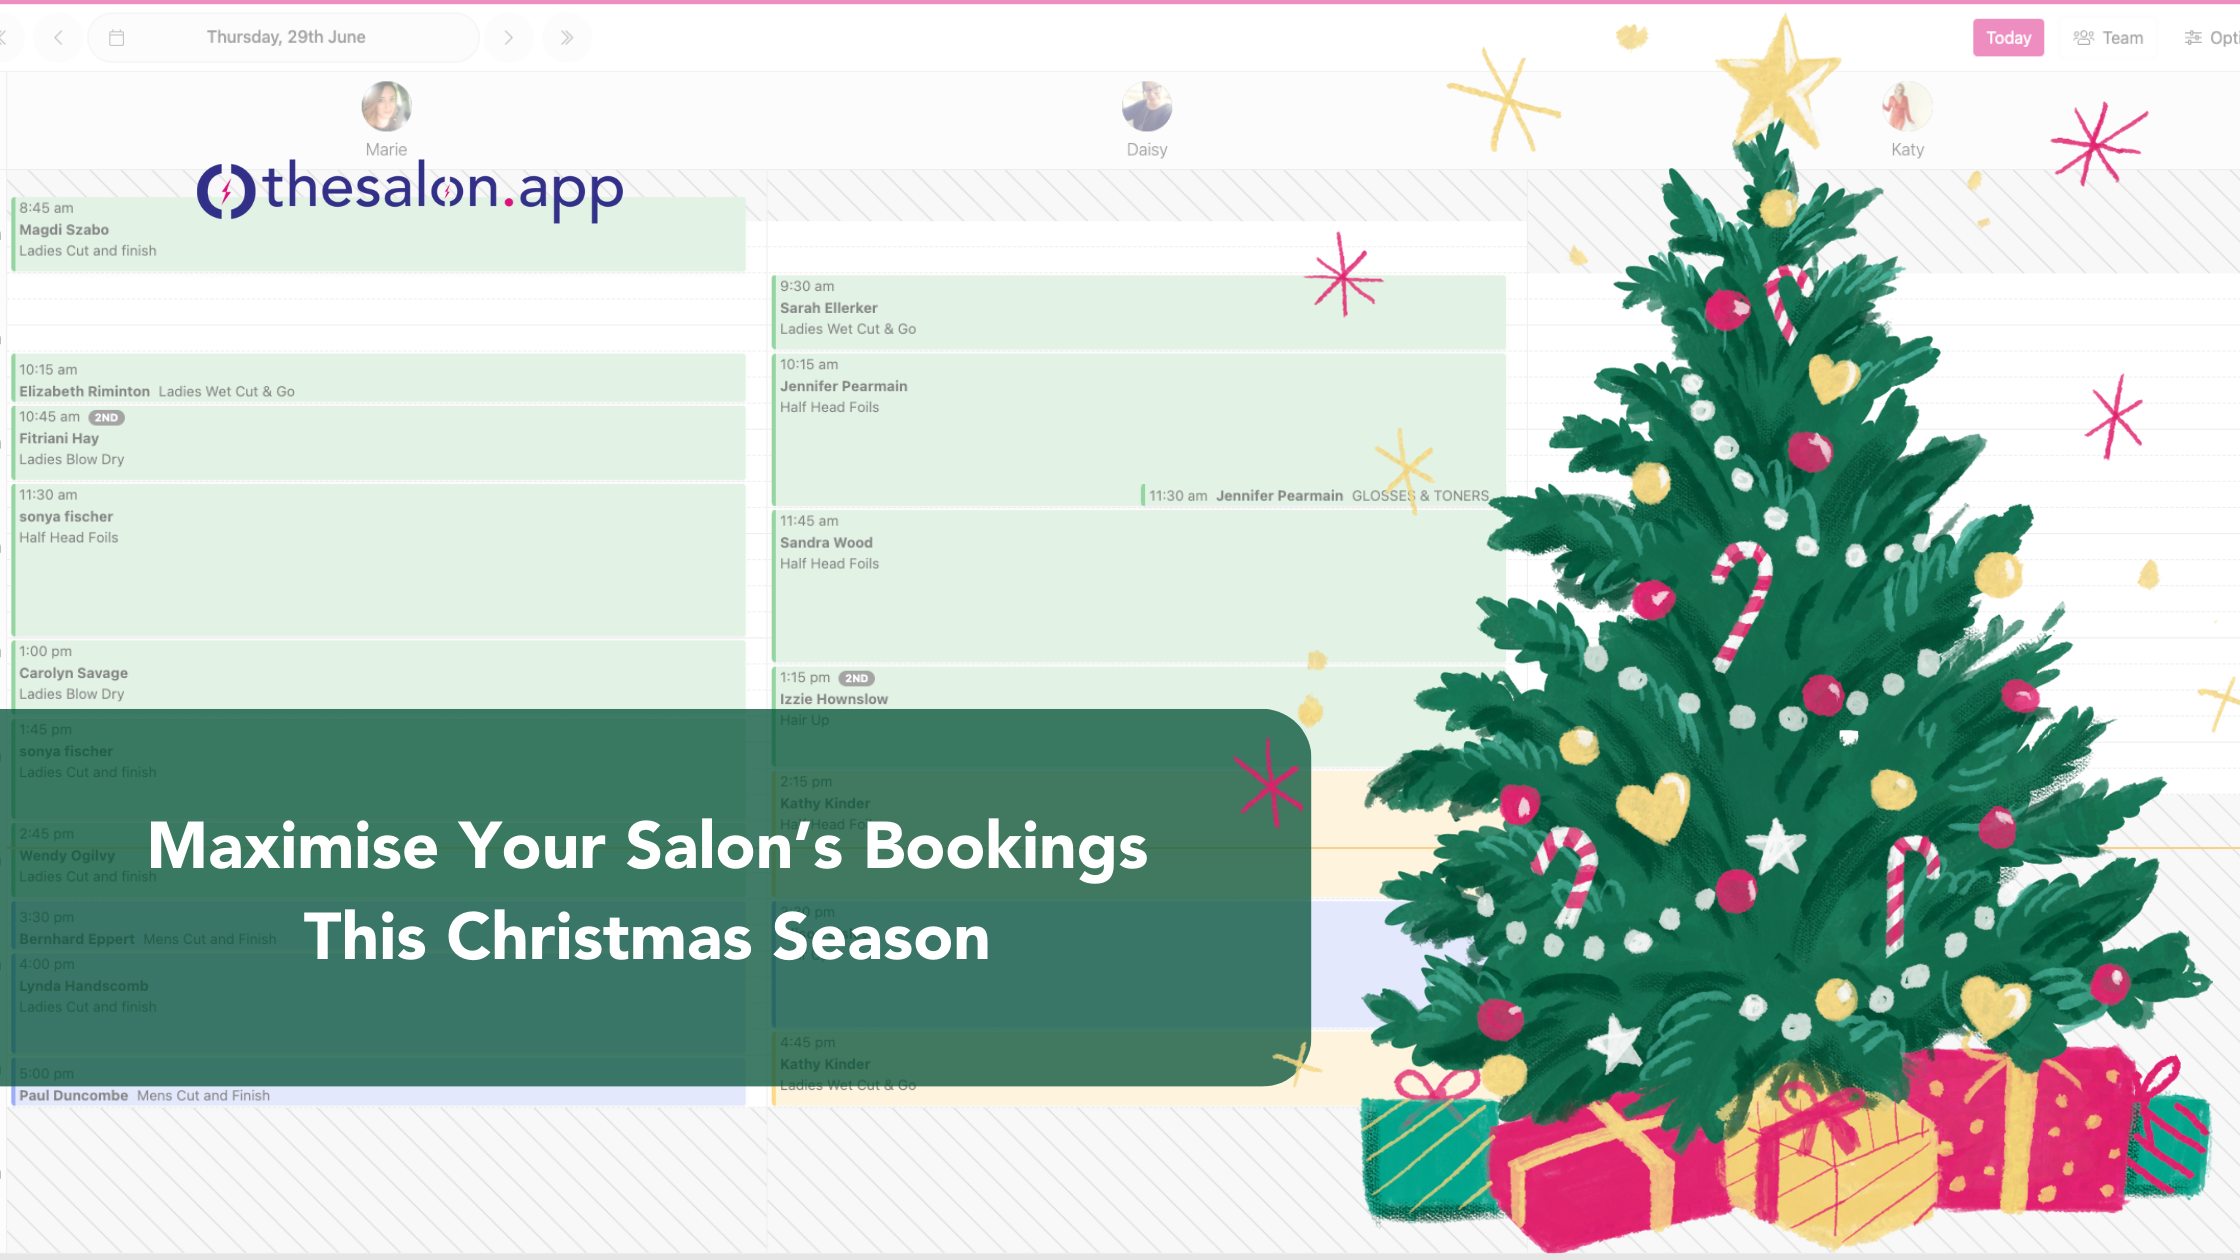 Maximise your salon's bookings this Christmas season